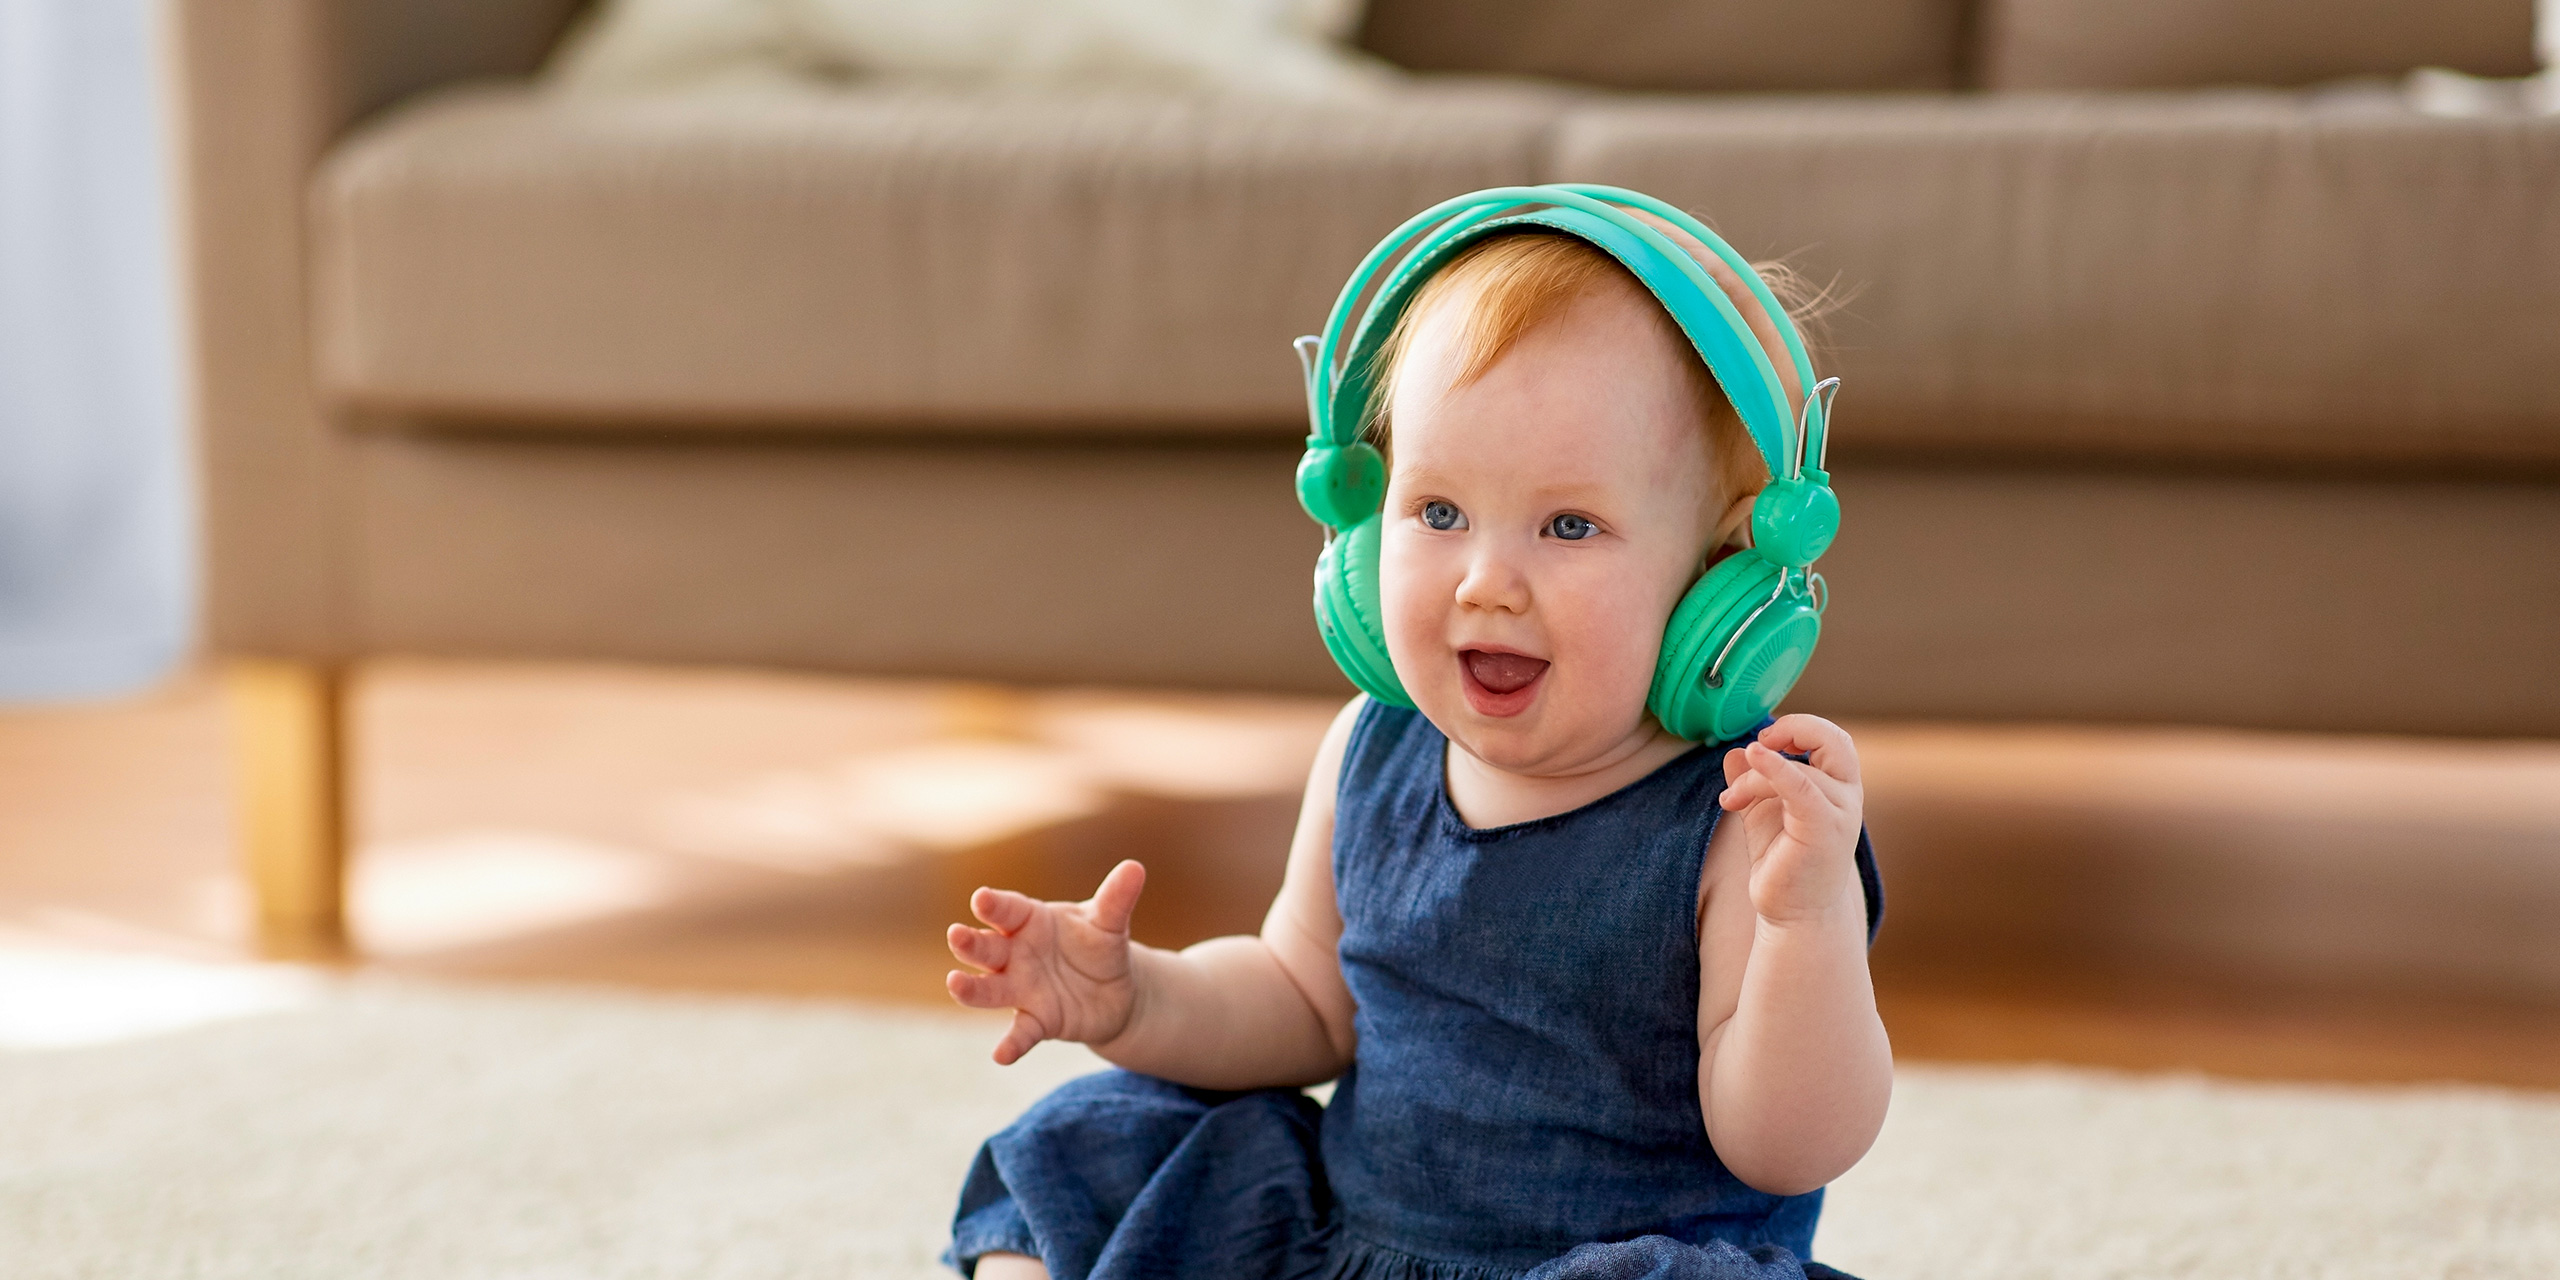 baby banz bluetooth headphones